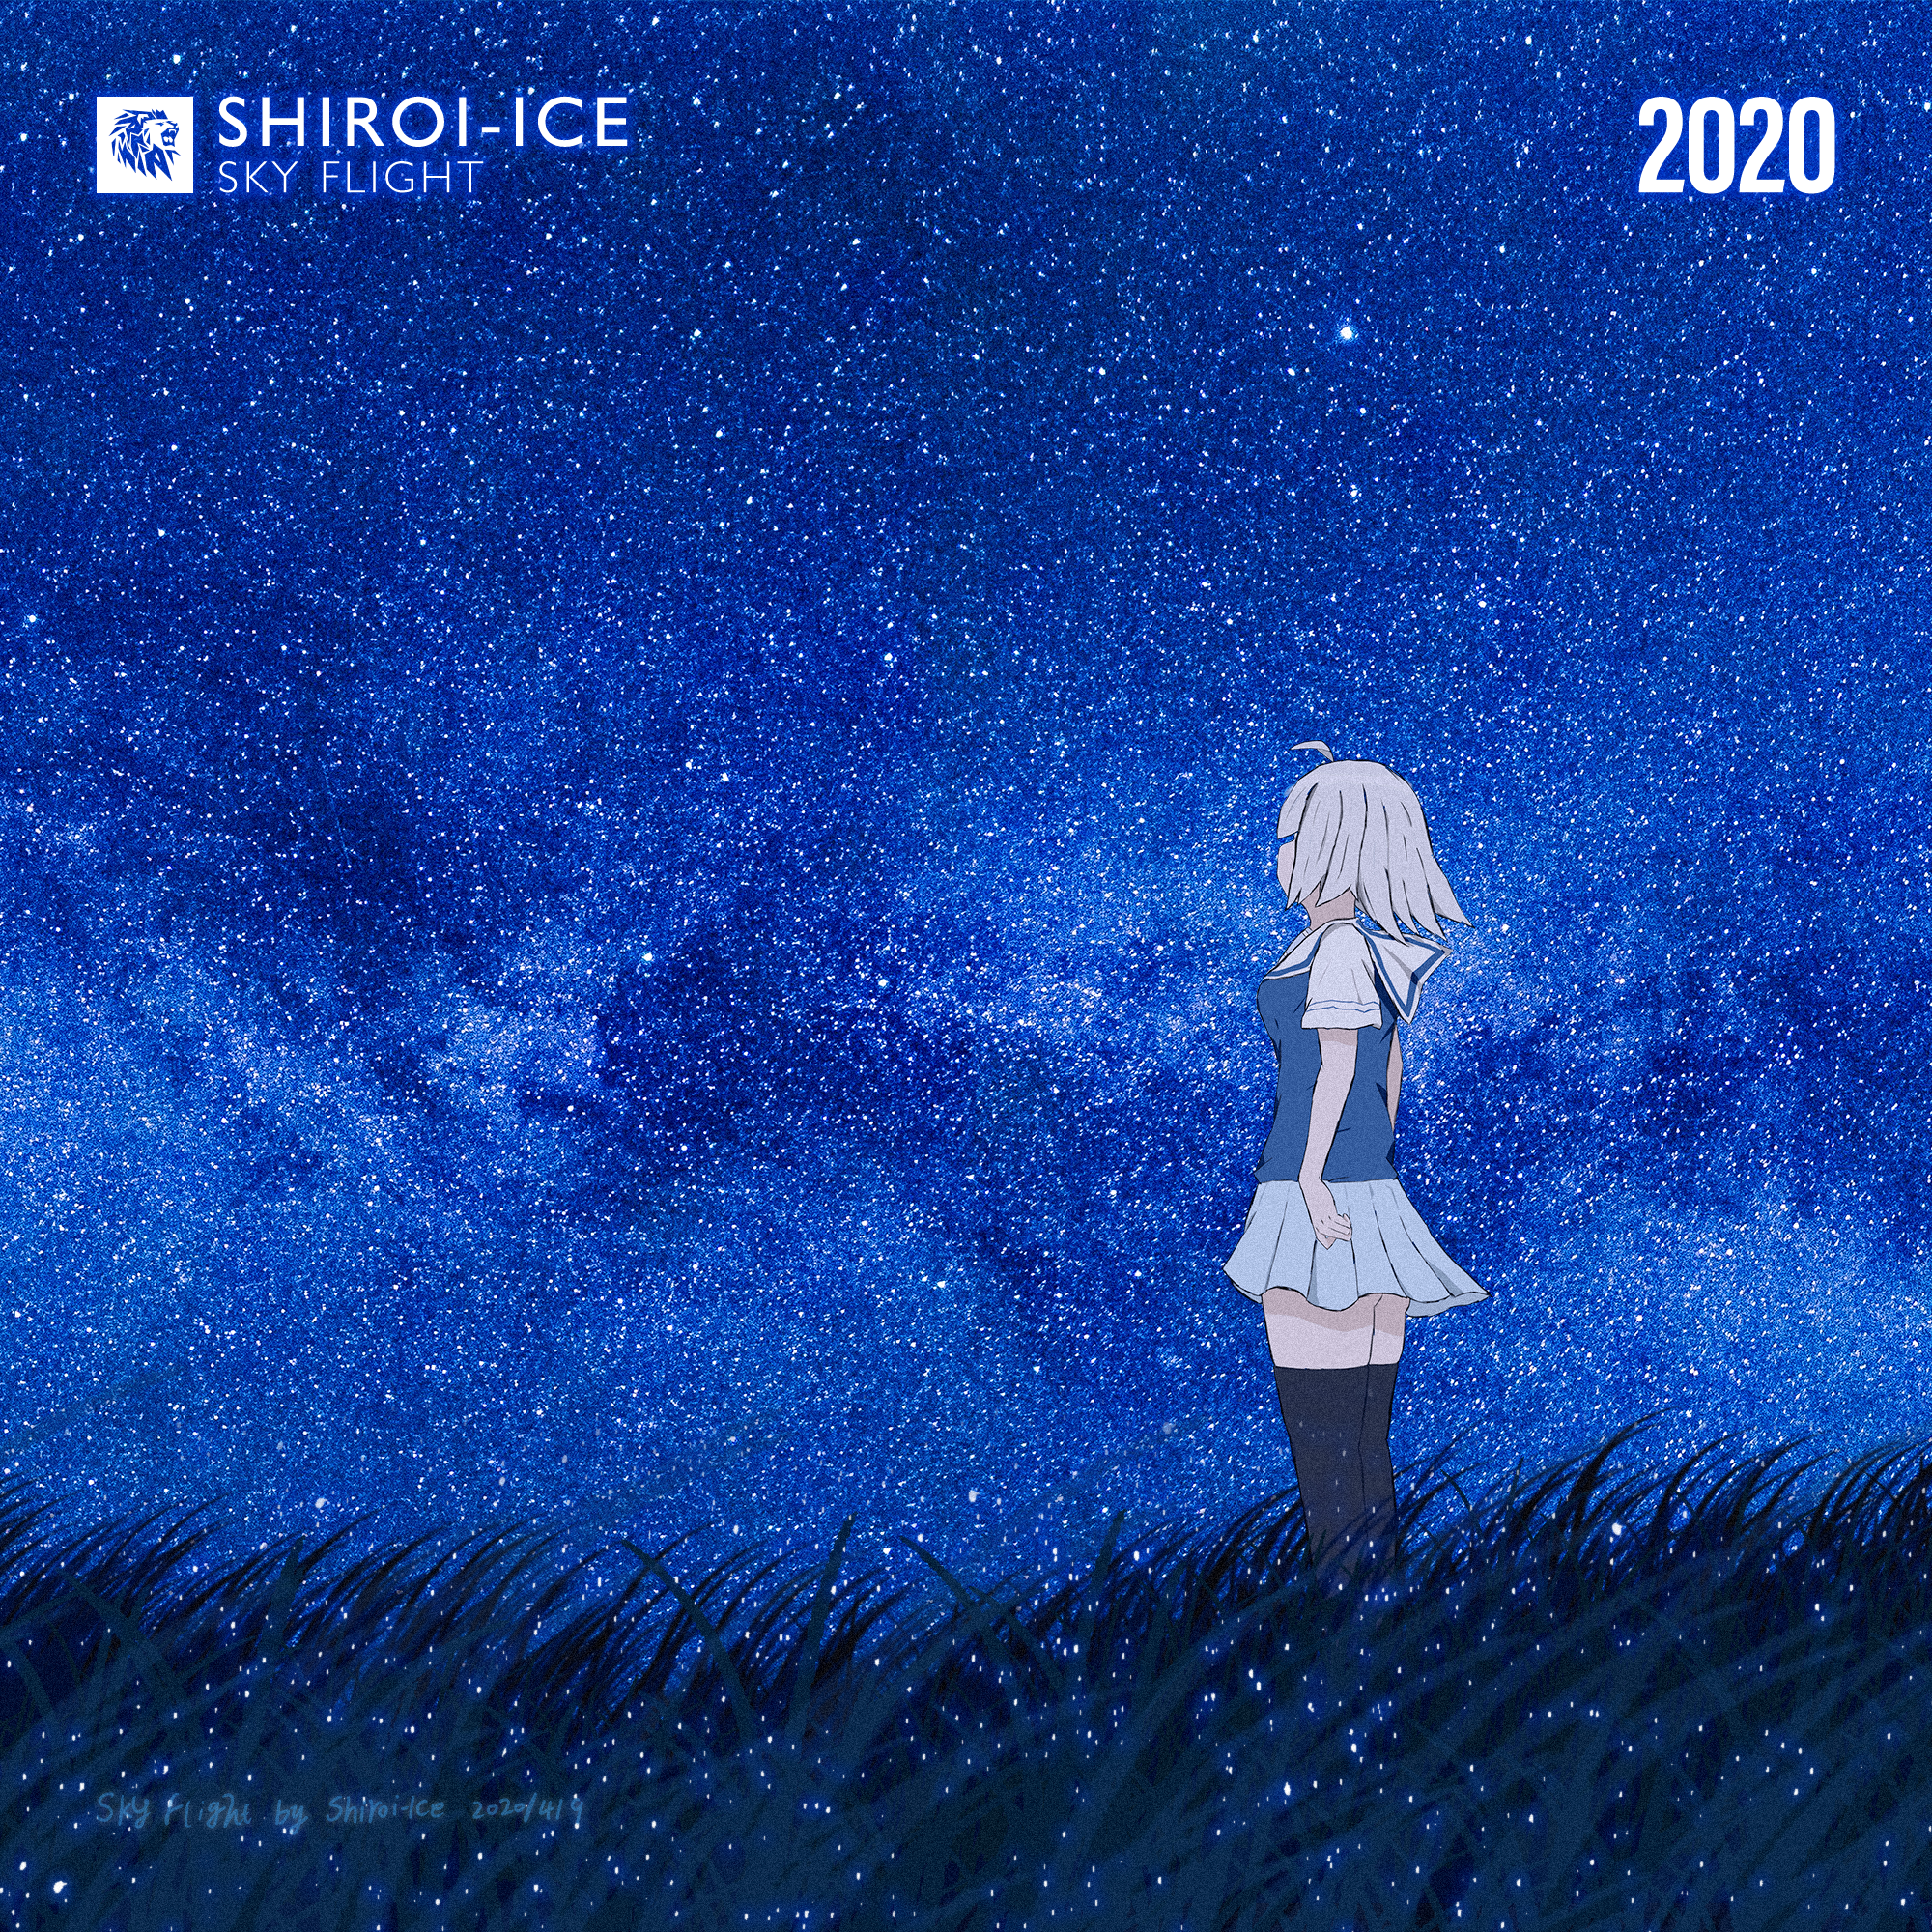 Shiroi-Ice - Departure!